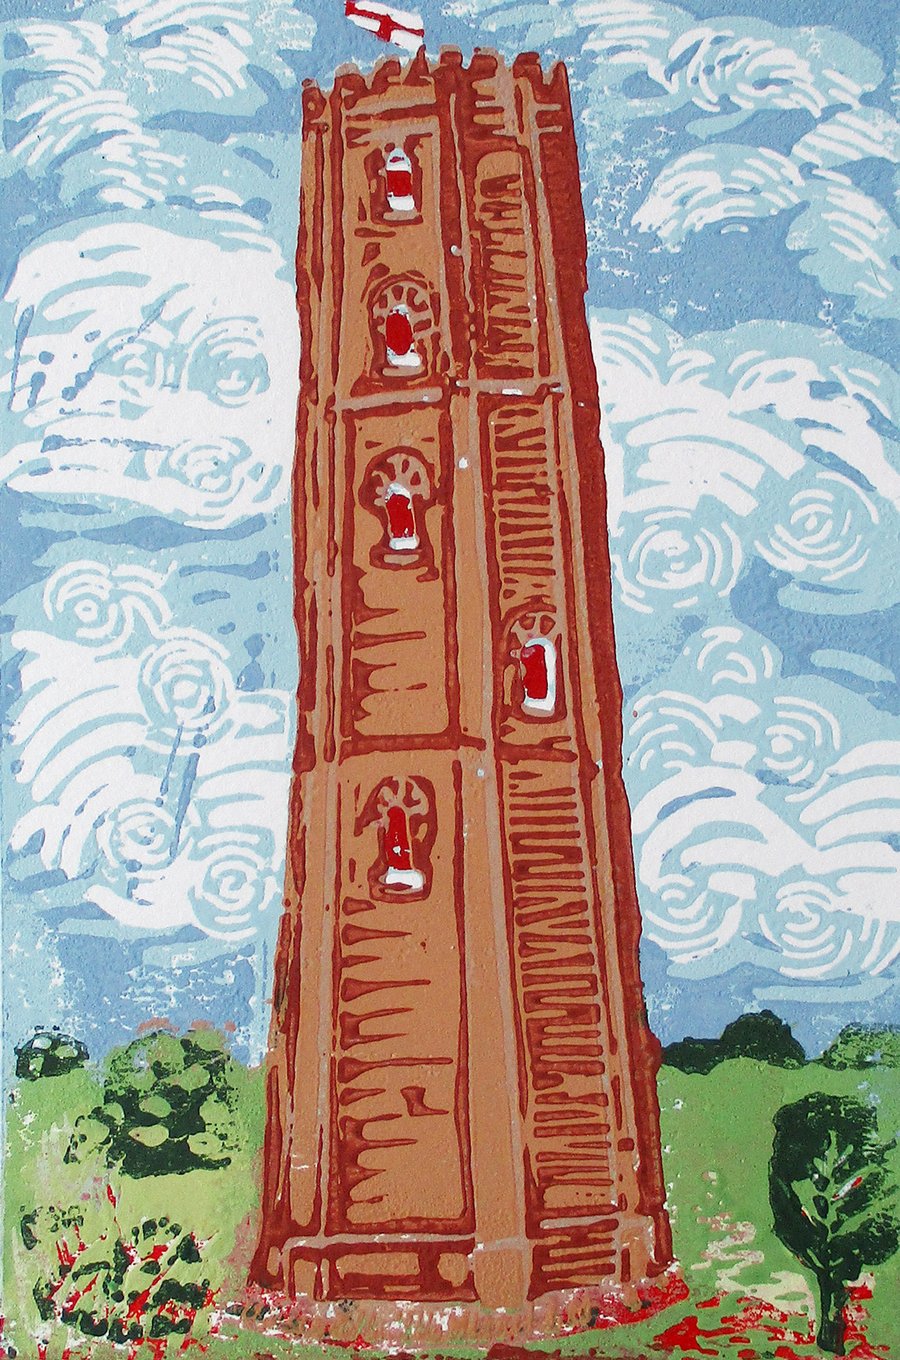 Naze Tower, Essex Original Hand Pressed Linocut Print Ltd Edition